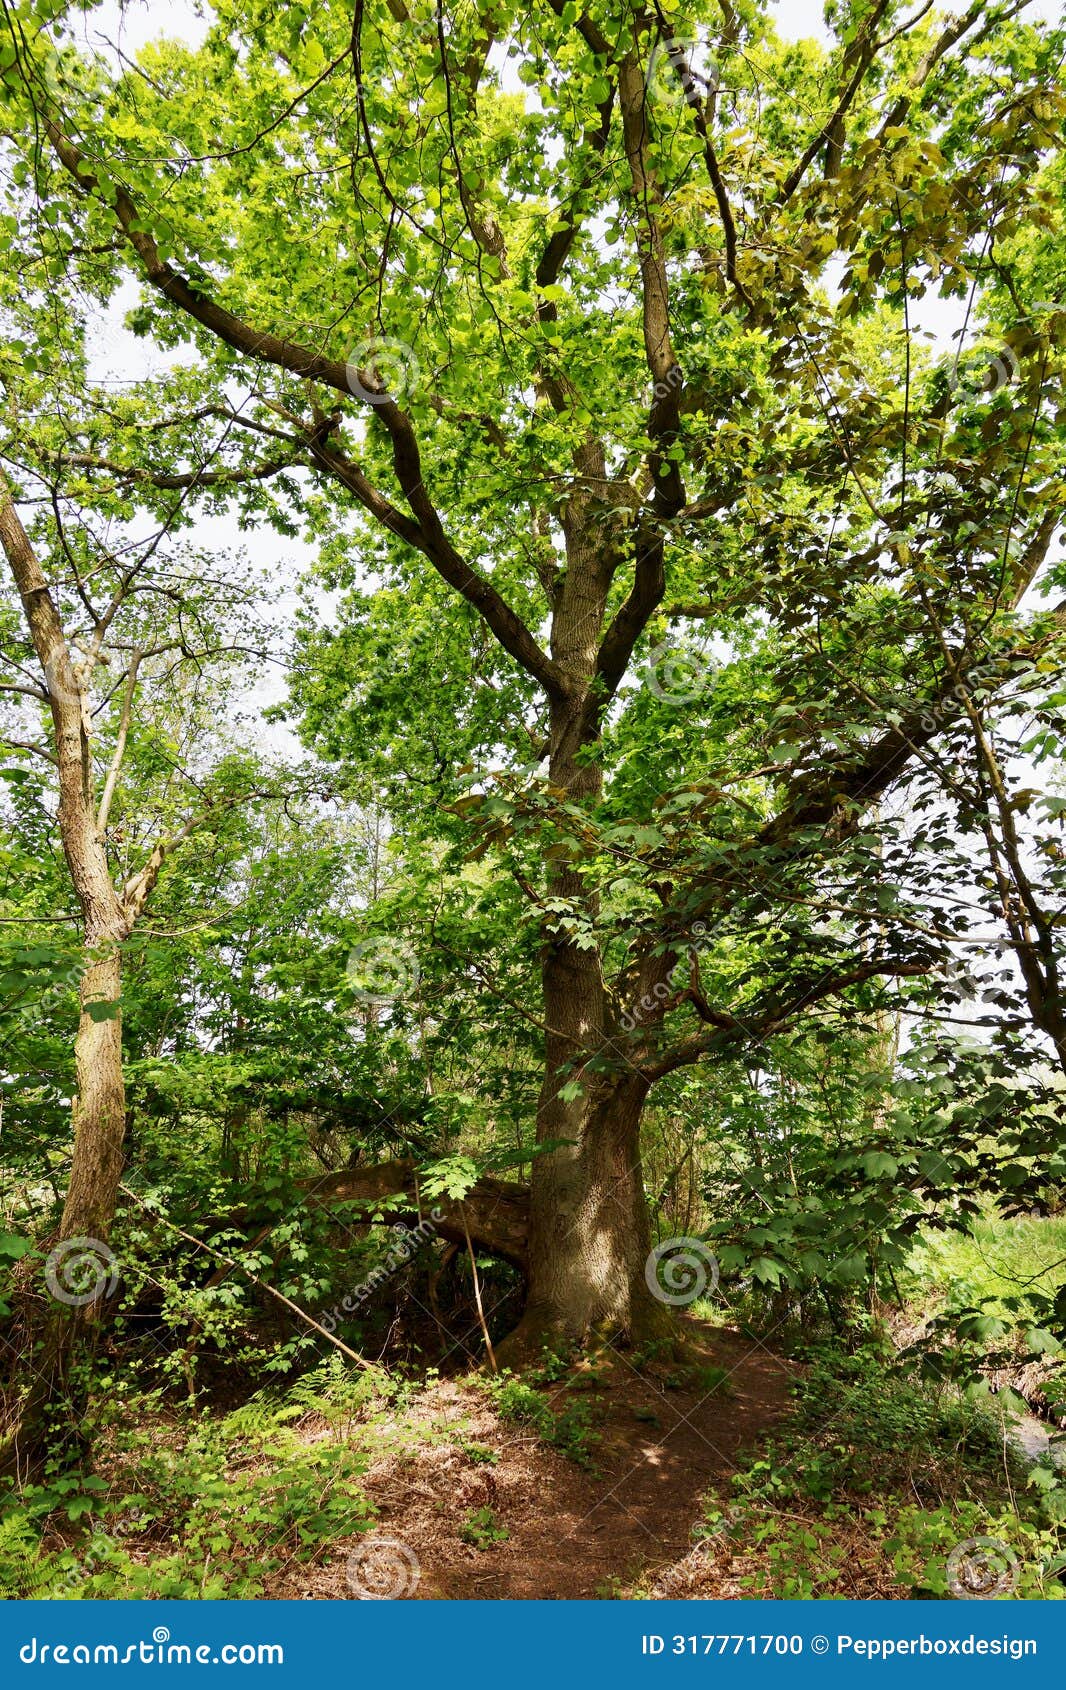 bright green spring foliage on oak tree, upton great broad, norfolk broads, near acle, norfolk, england, uk